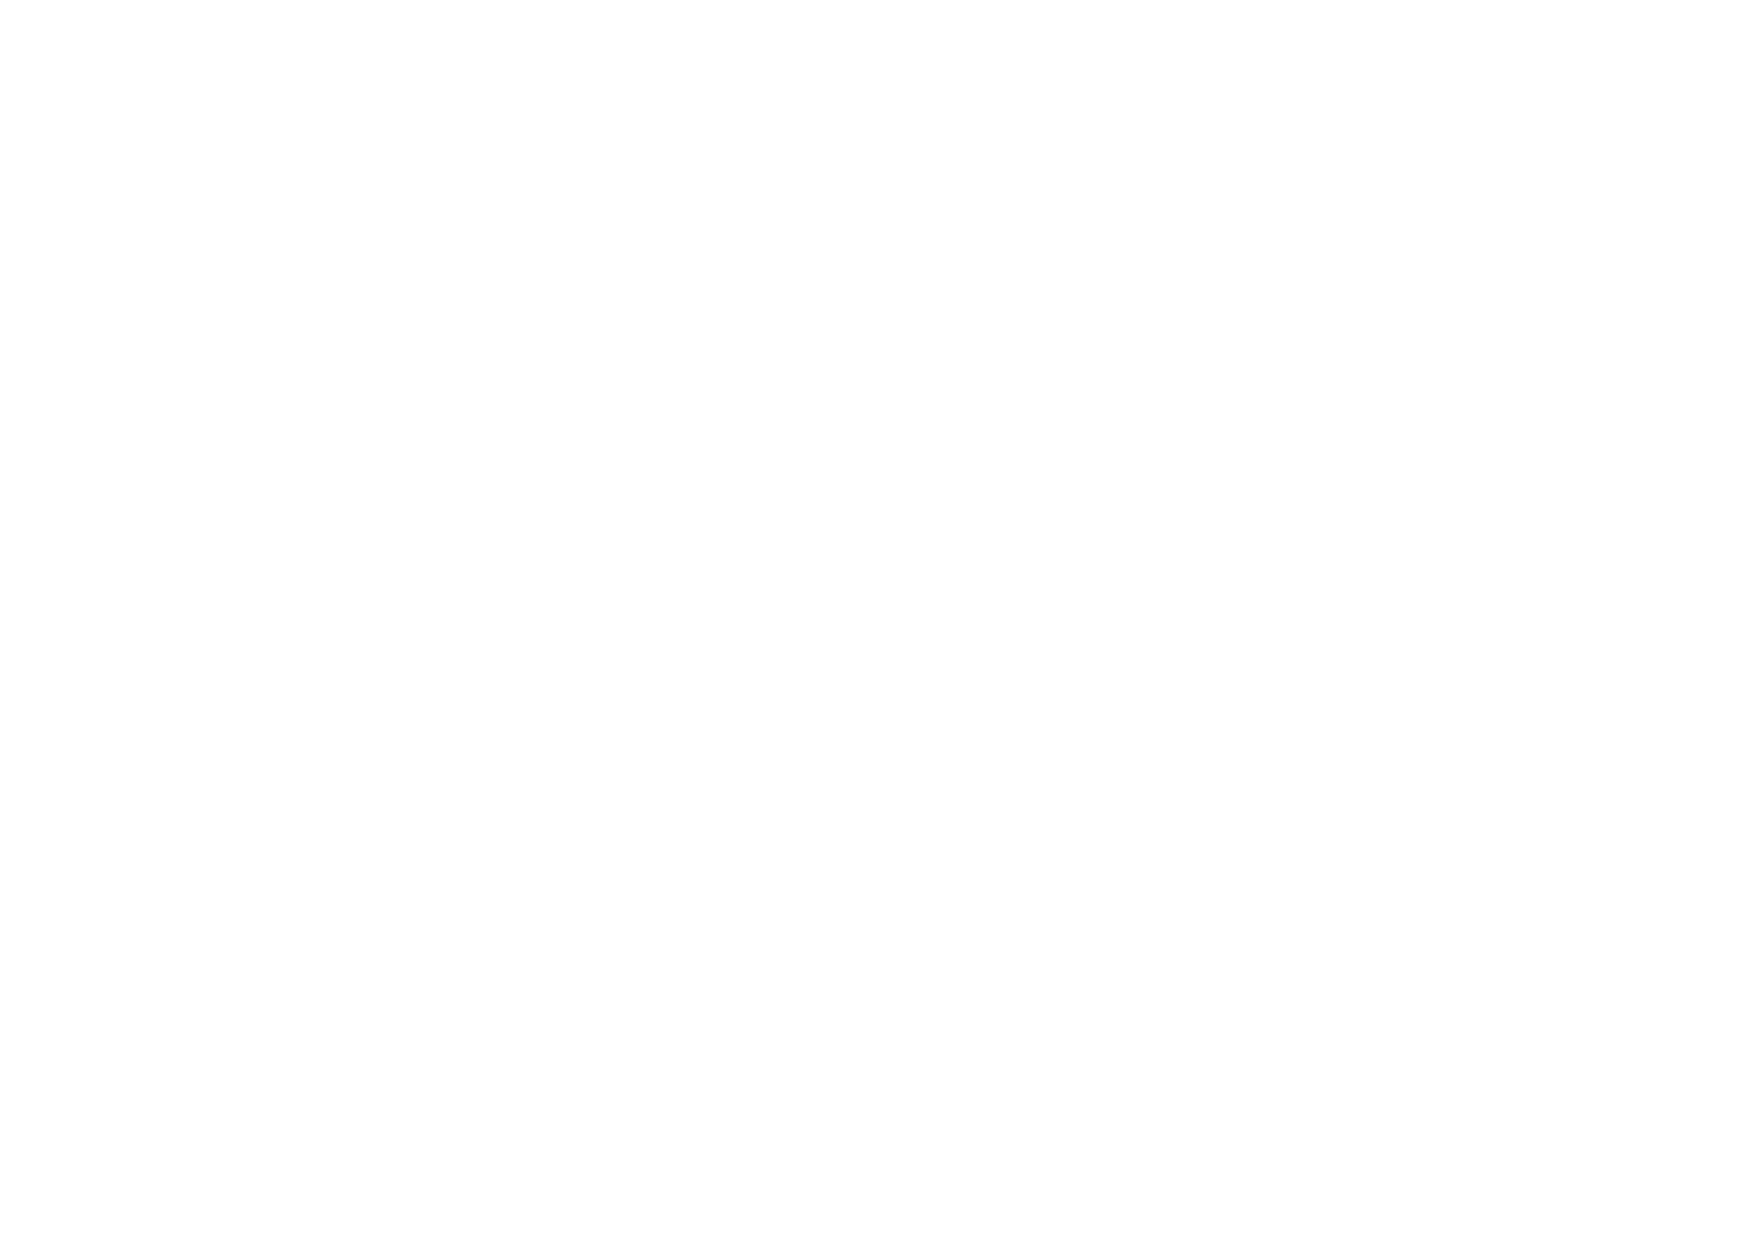 personal website header image.